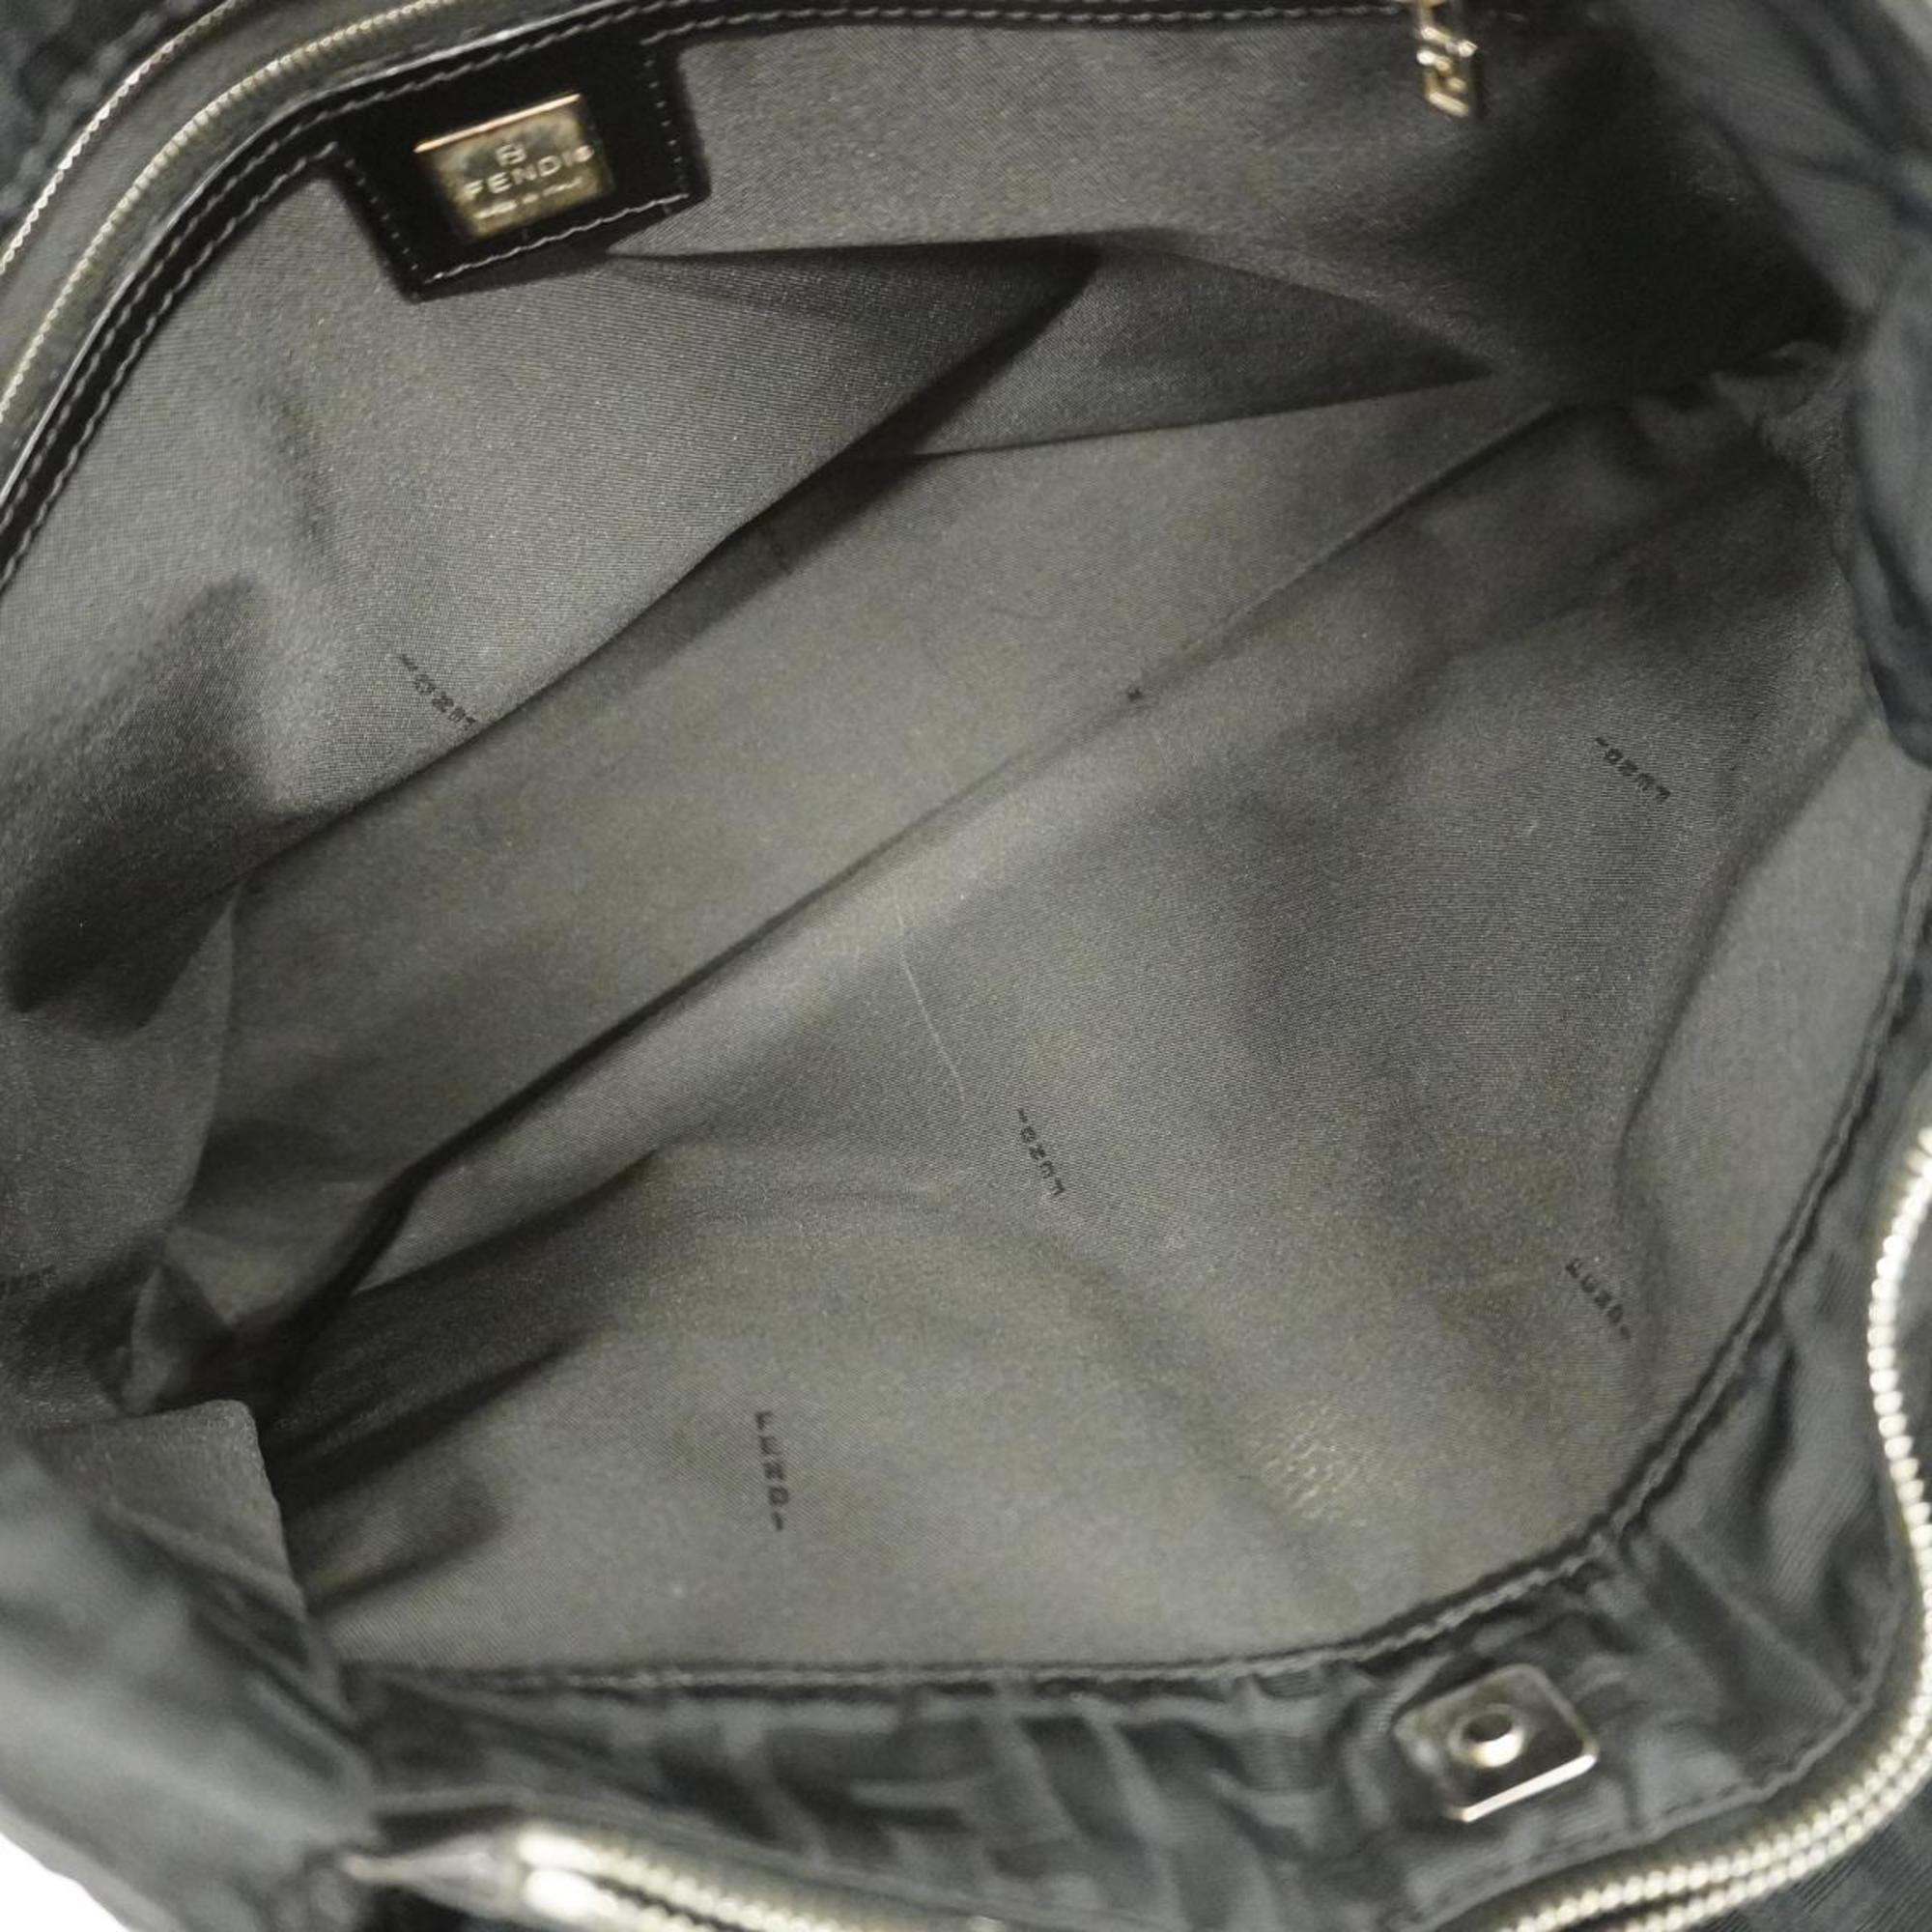 Fendi Shoulder Bag Zucca Nylon Leather Black Women's